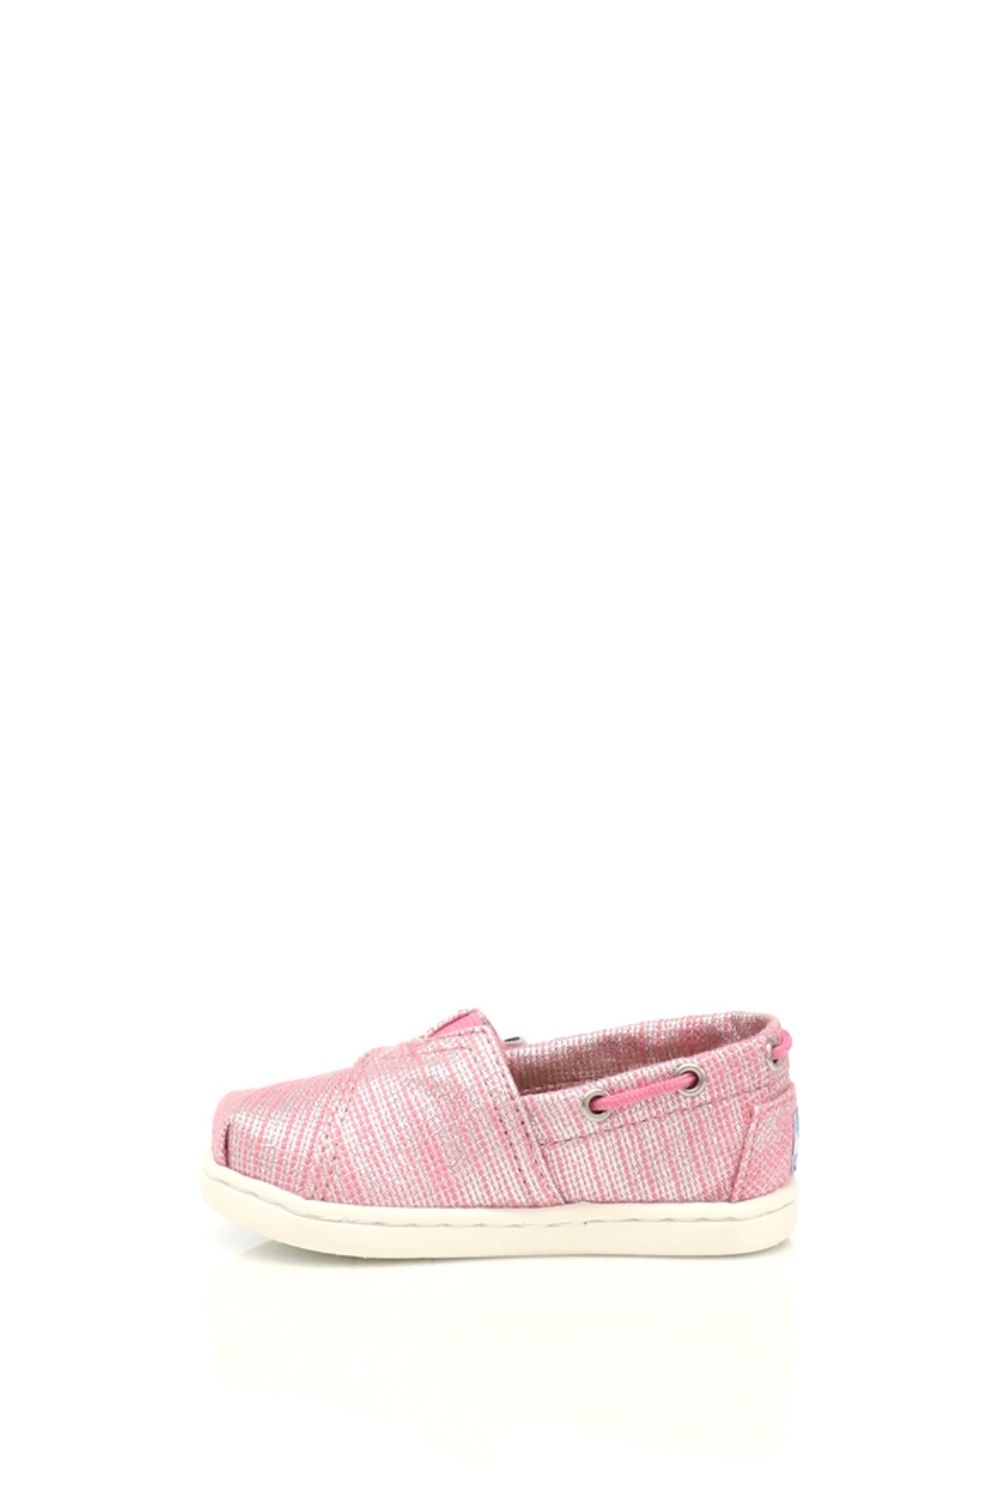 TOMS - Παιδικά παπούτσια TOMS ροζ Παιδικά/Boys/Παπούτσια/Εσπαντρίγιες